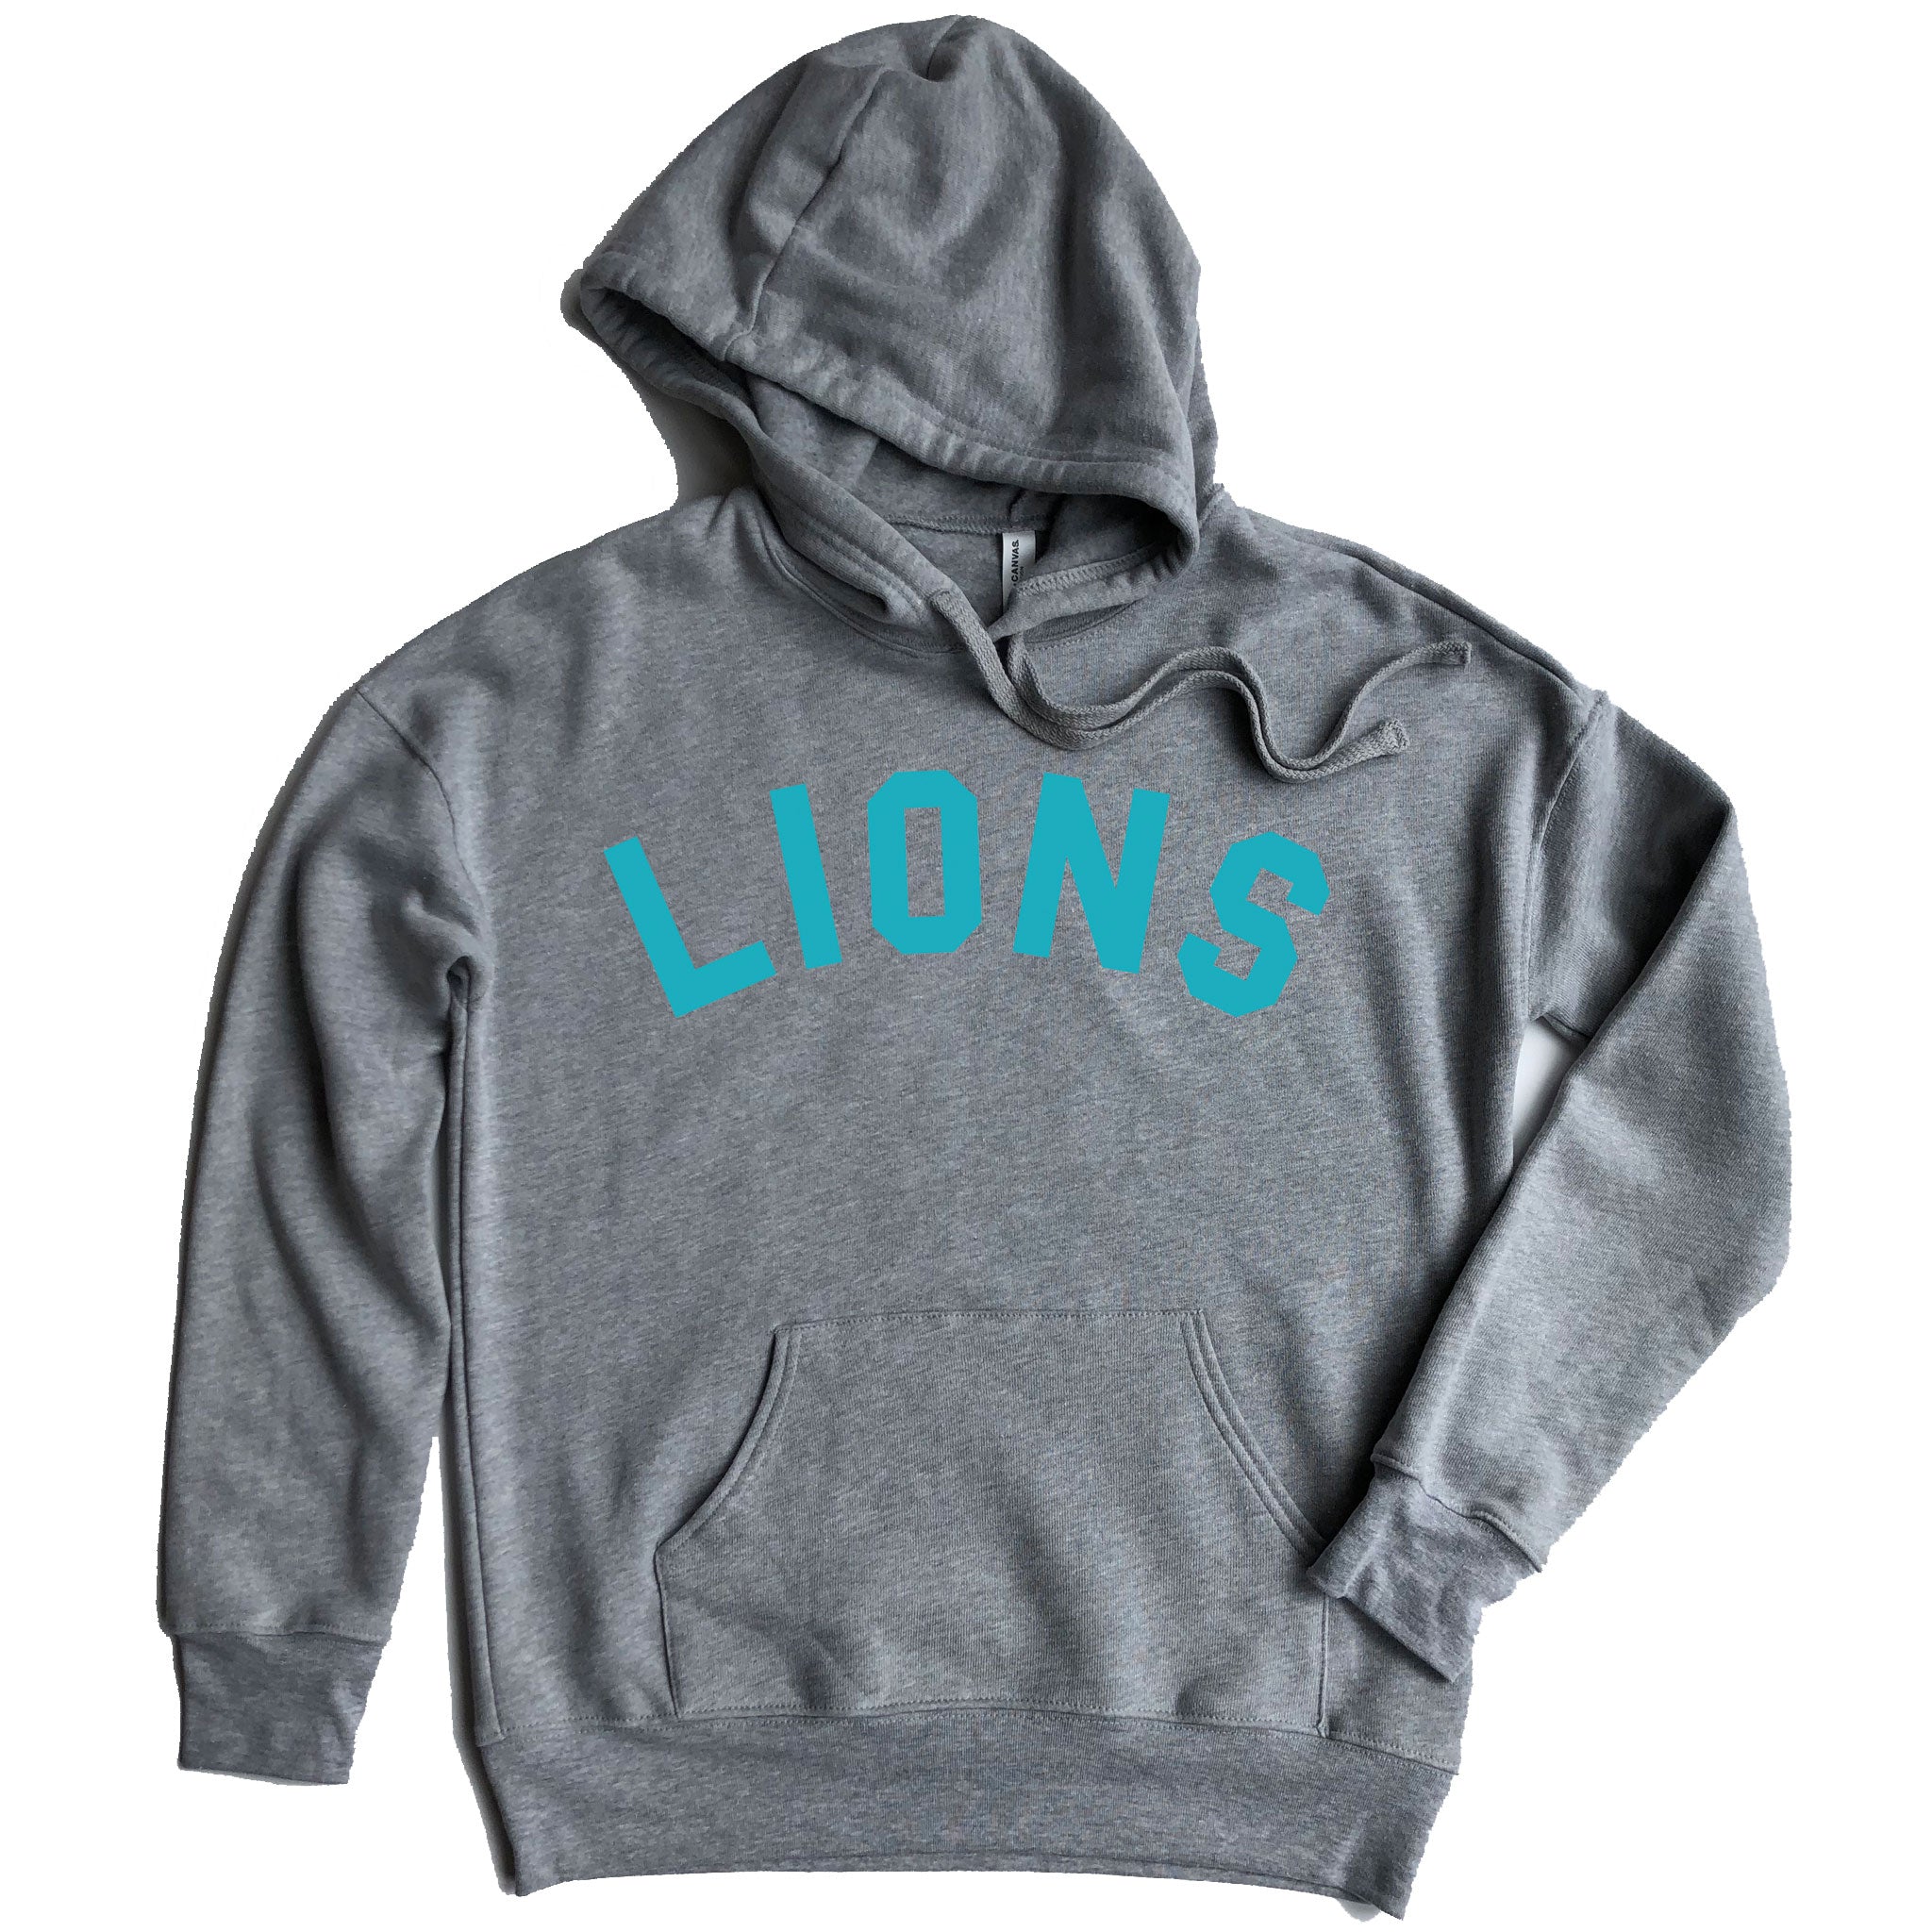 Lincoln Lions Adult Hooded Sweatshirt